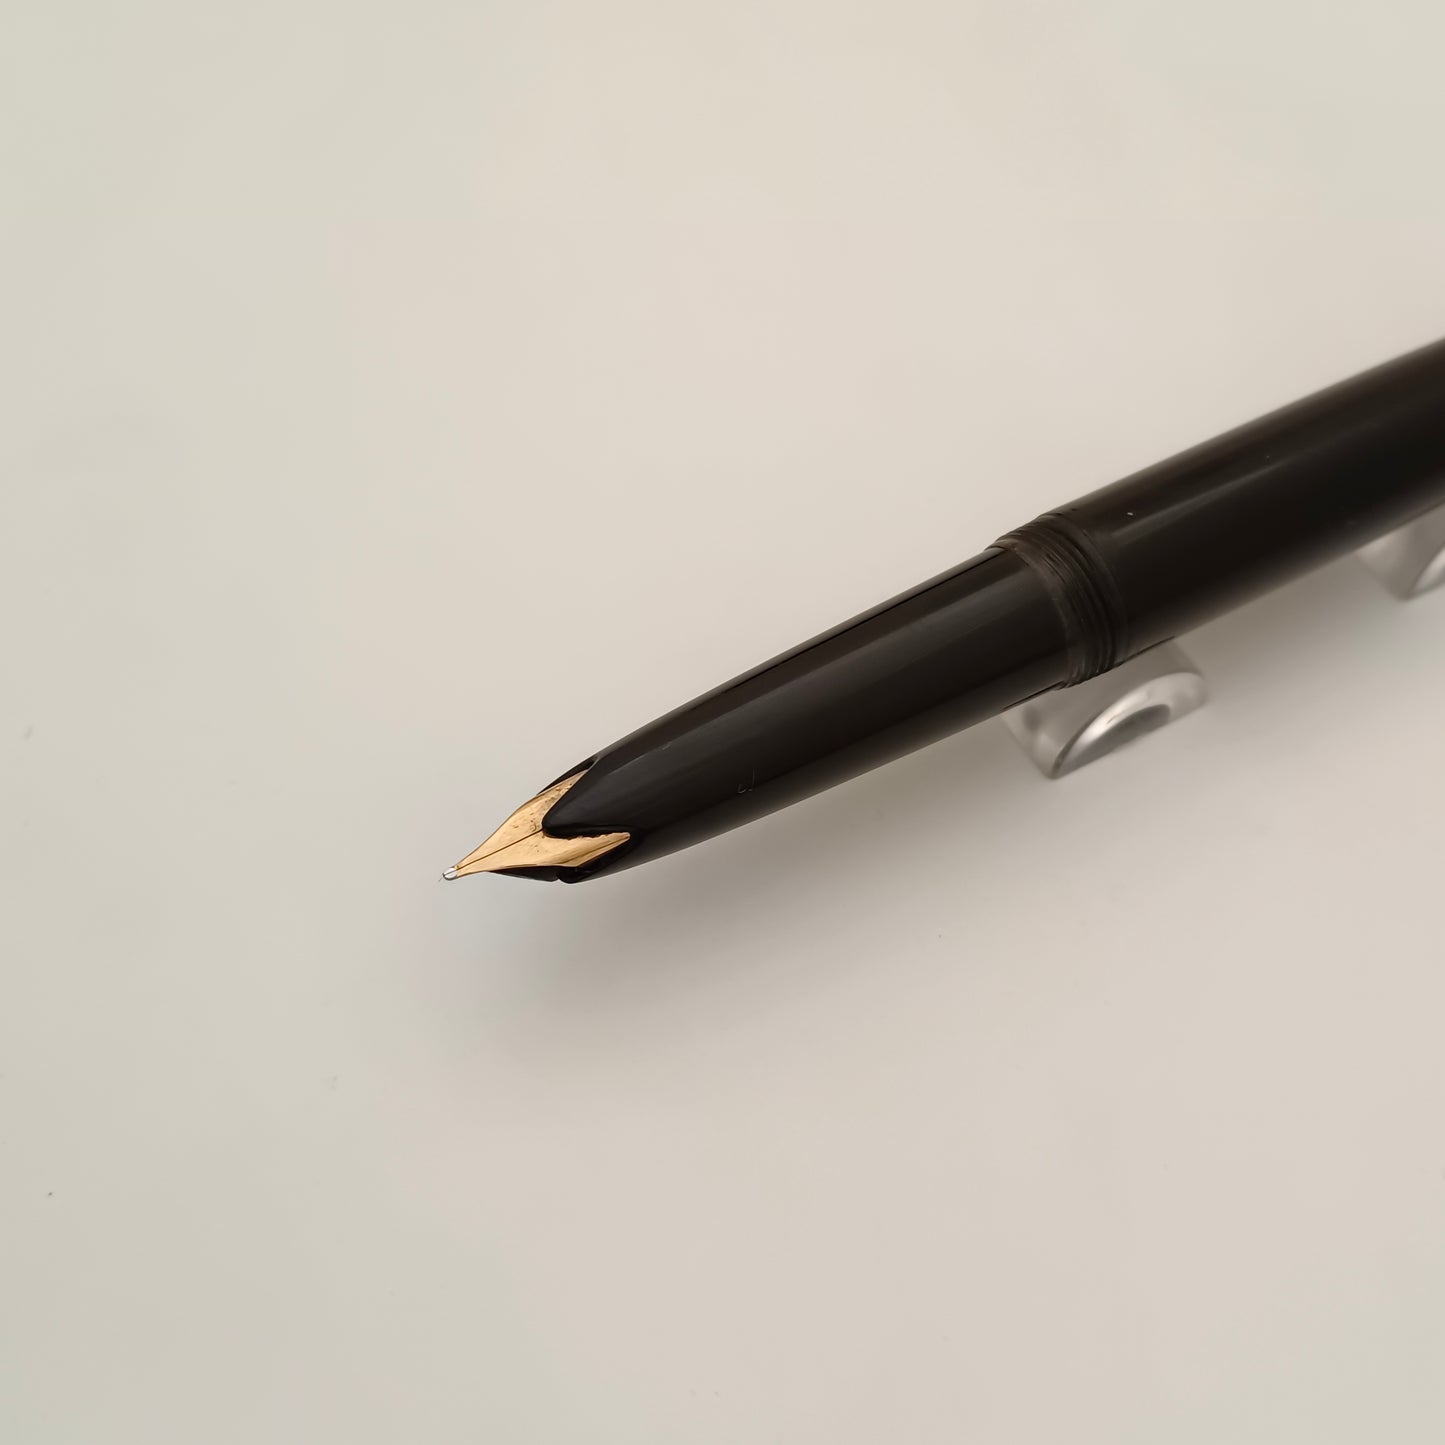 Vintage Montblanc No. 32 Black Fountain Pen (1970s)